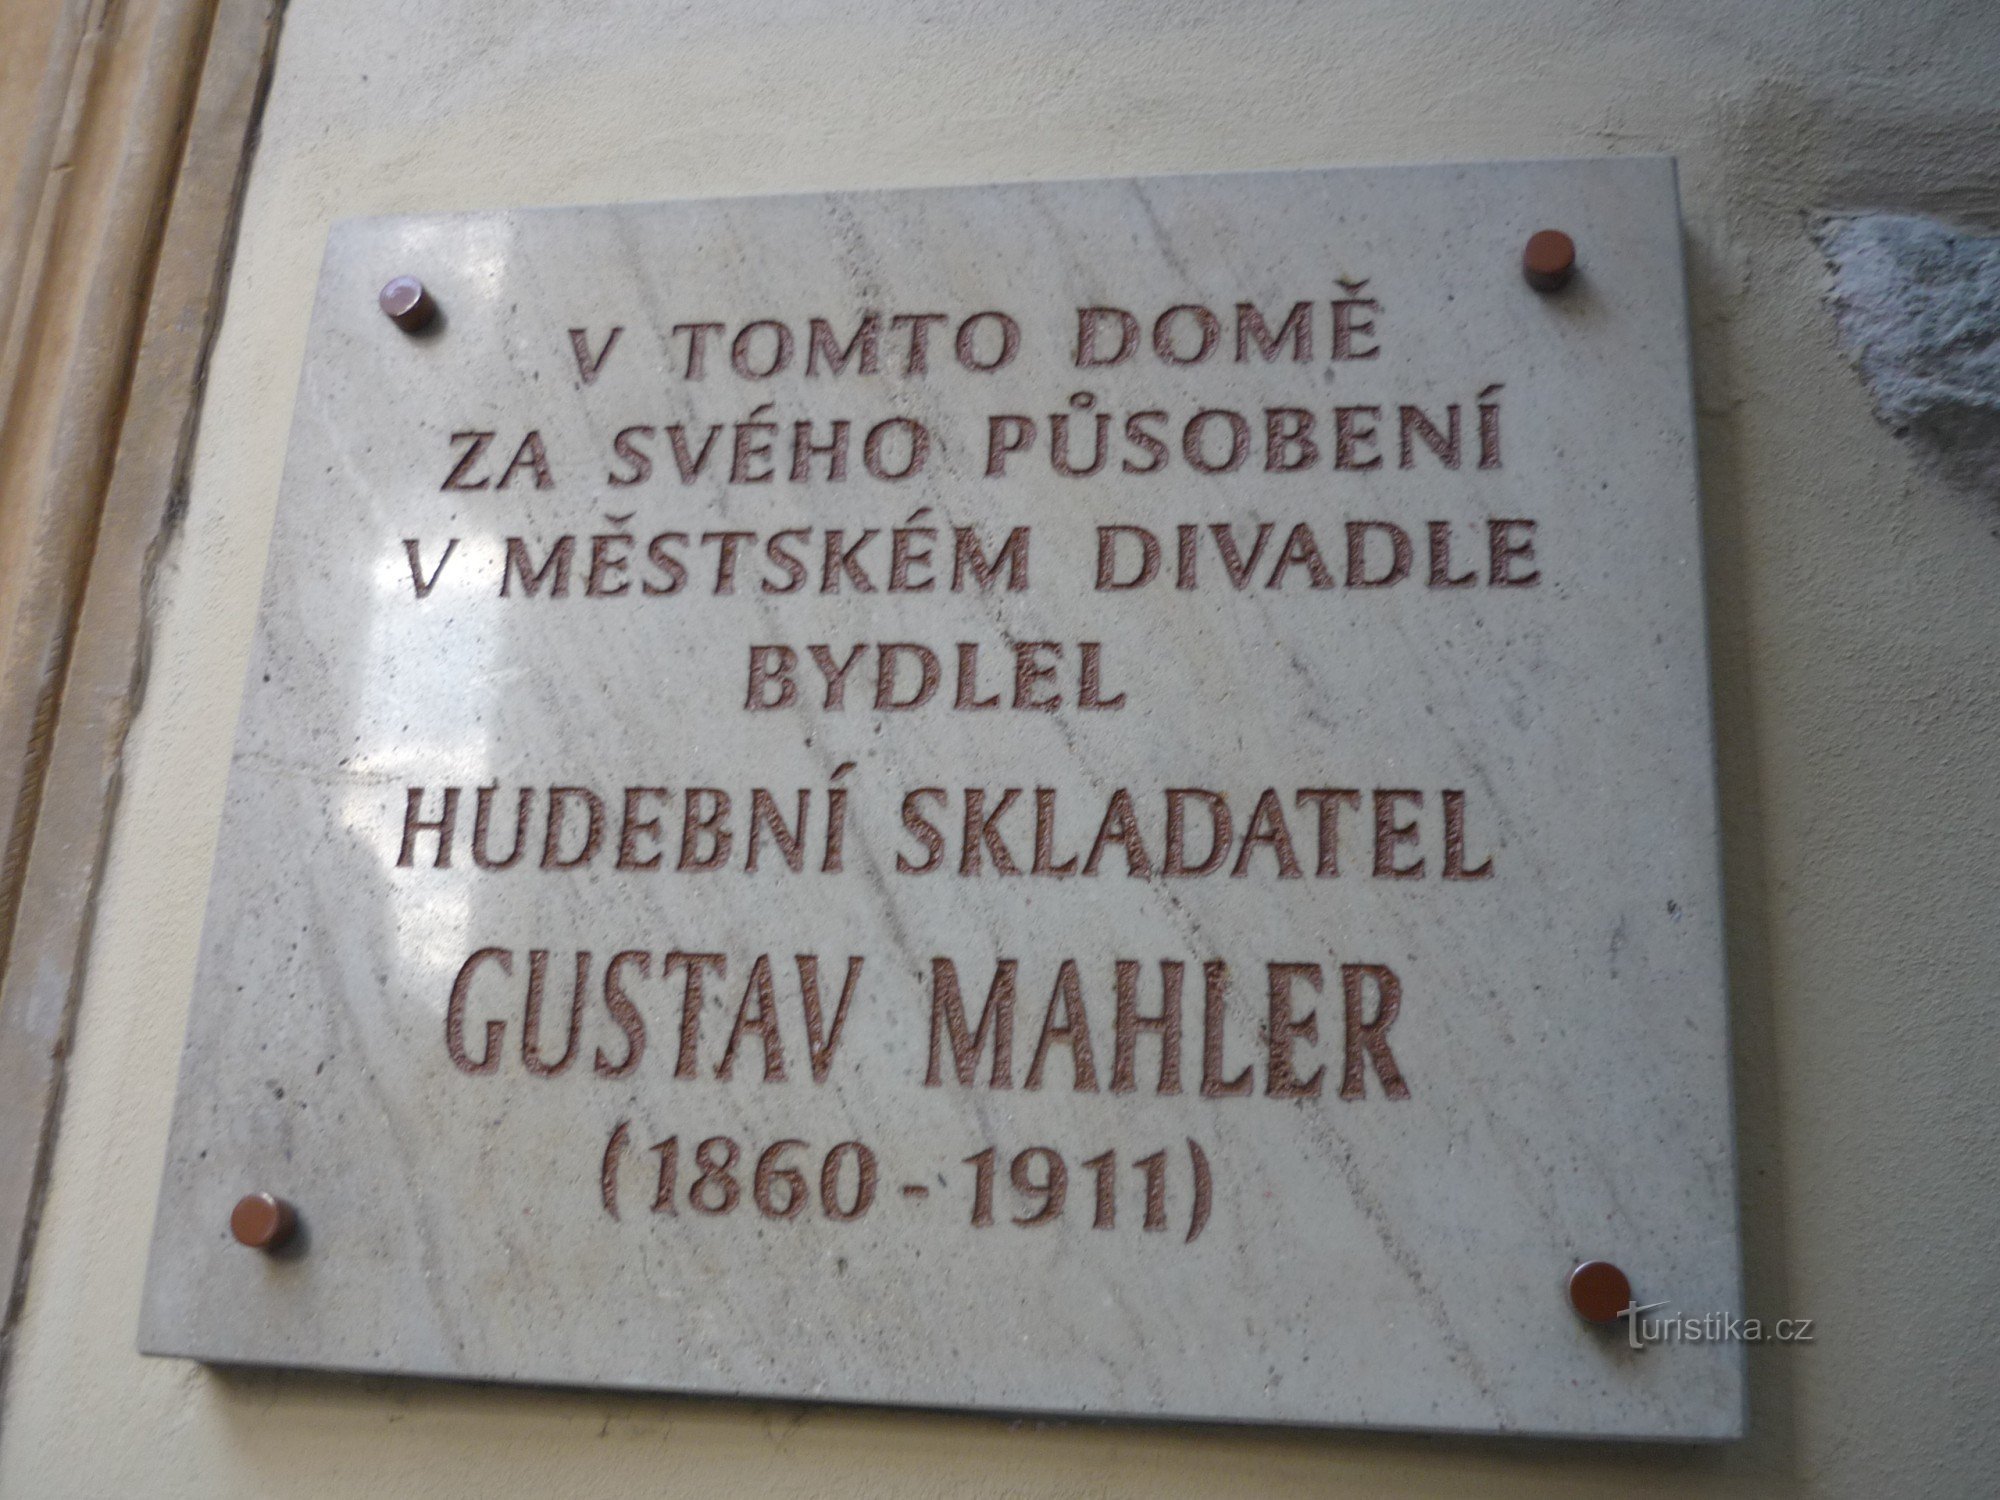 Gustave Mahler II